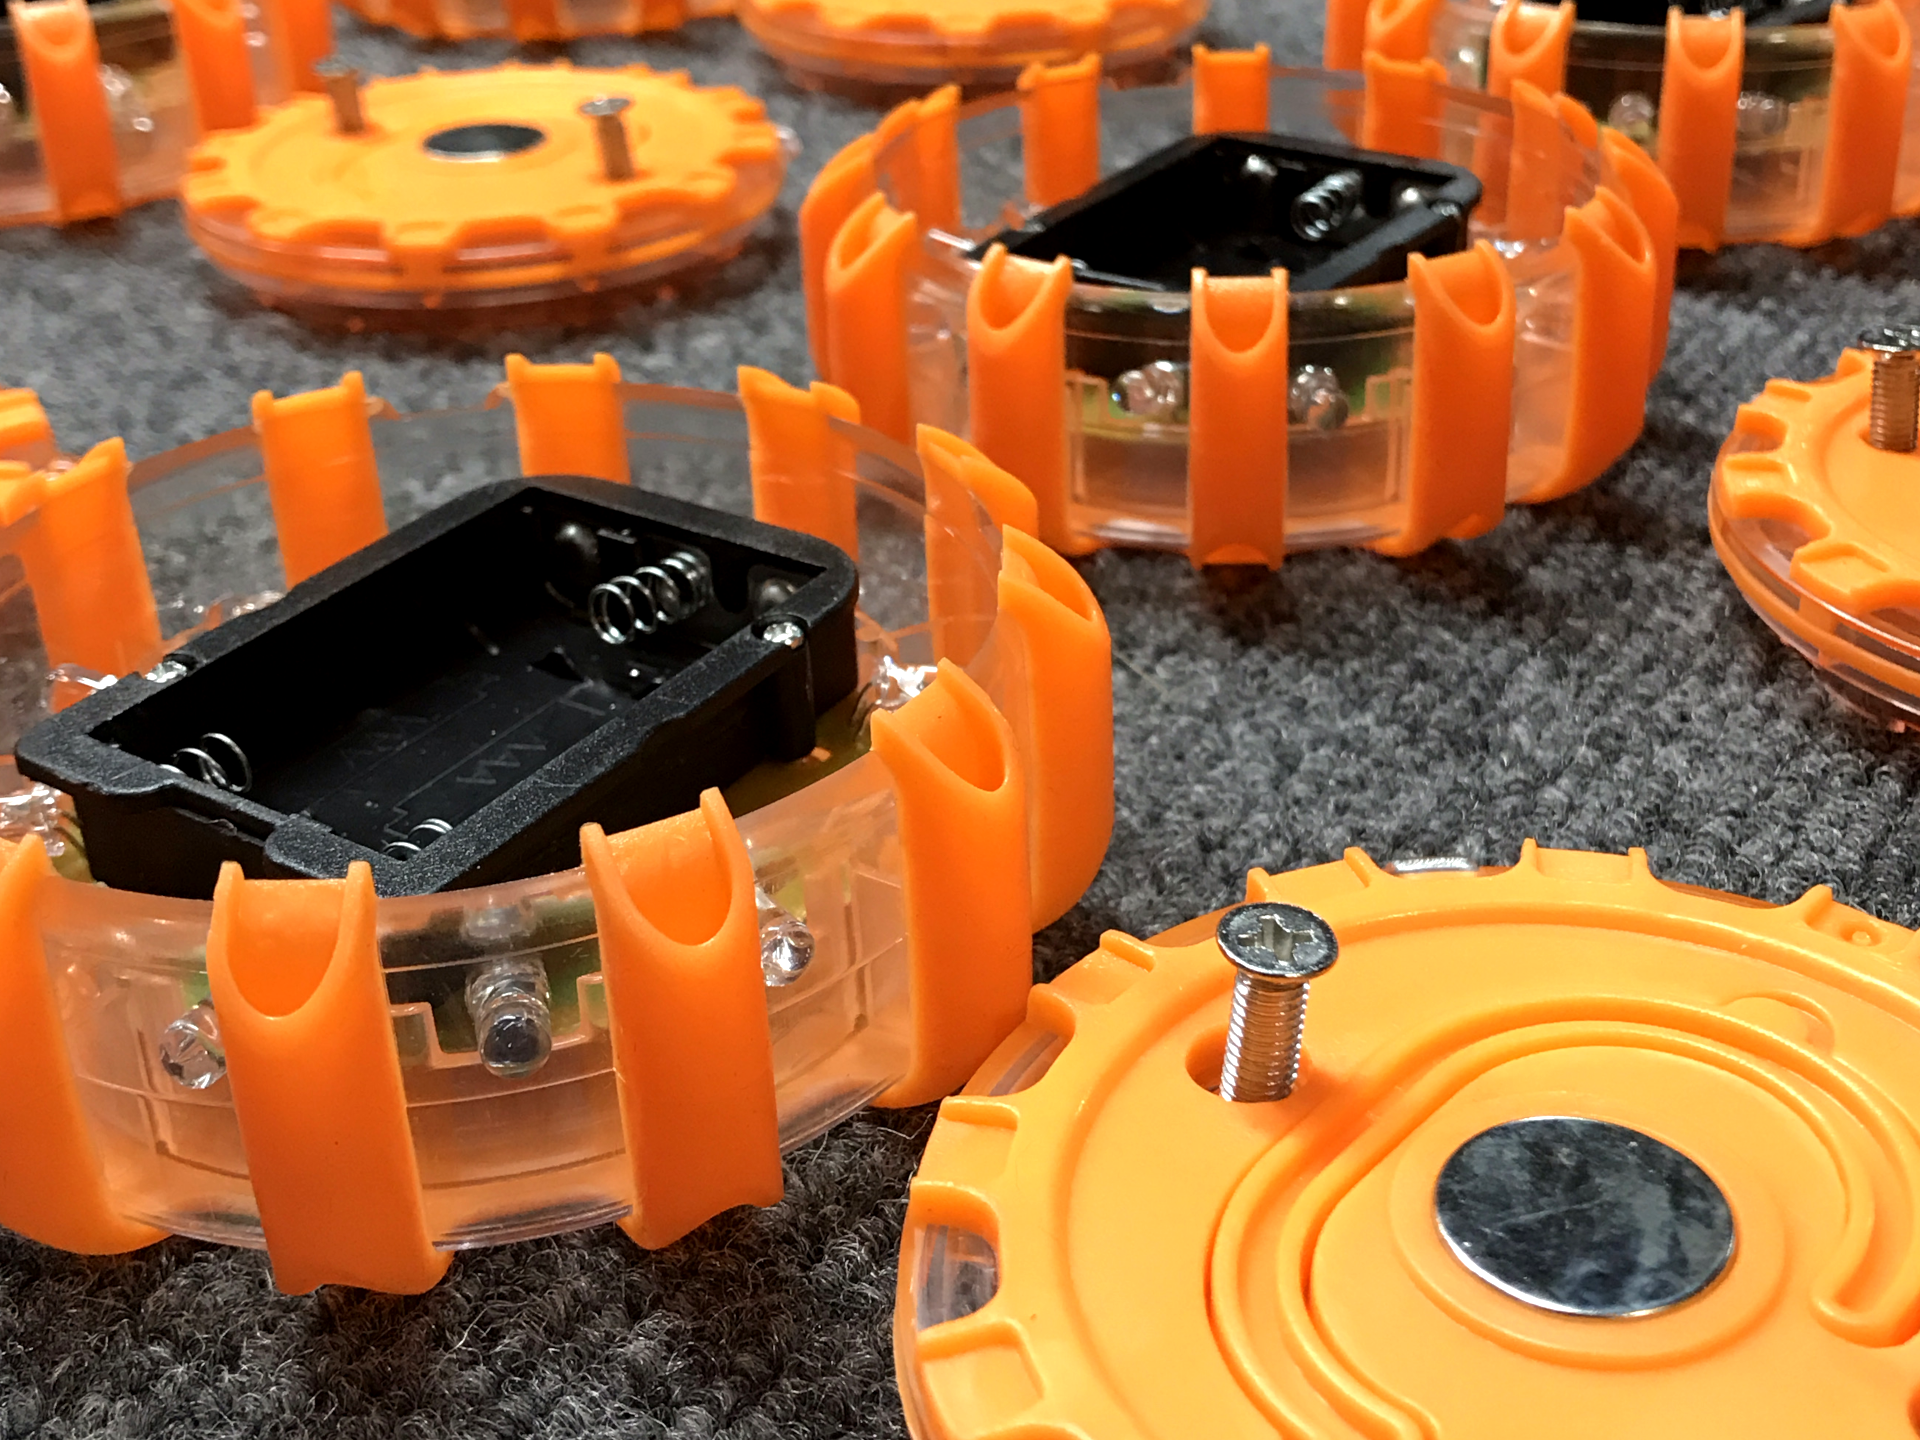 Warnblitzleuchte FLARE, orange, gelbe LEDs Batteriebetrieben - Scheureder  PROTECT YOU, TO RESCUE!